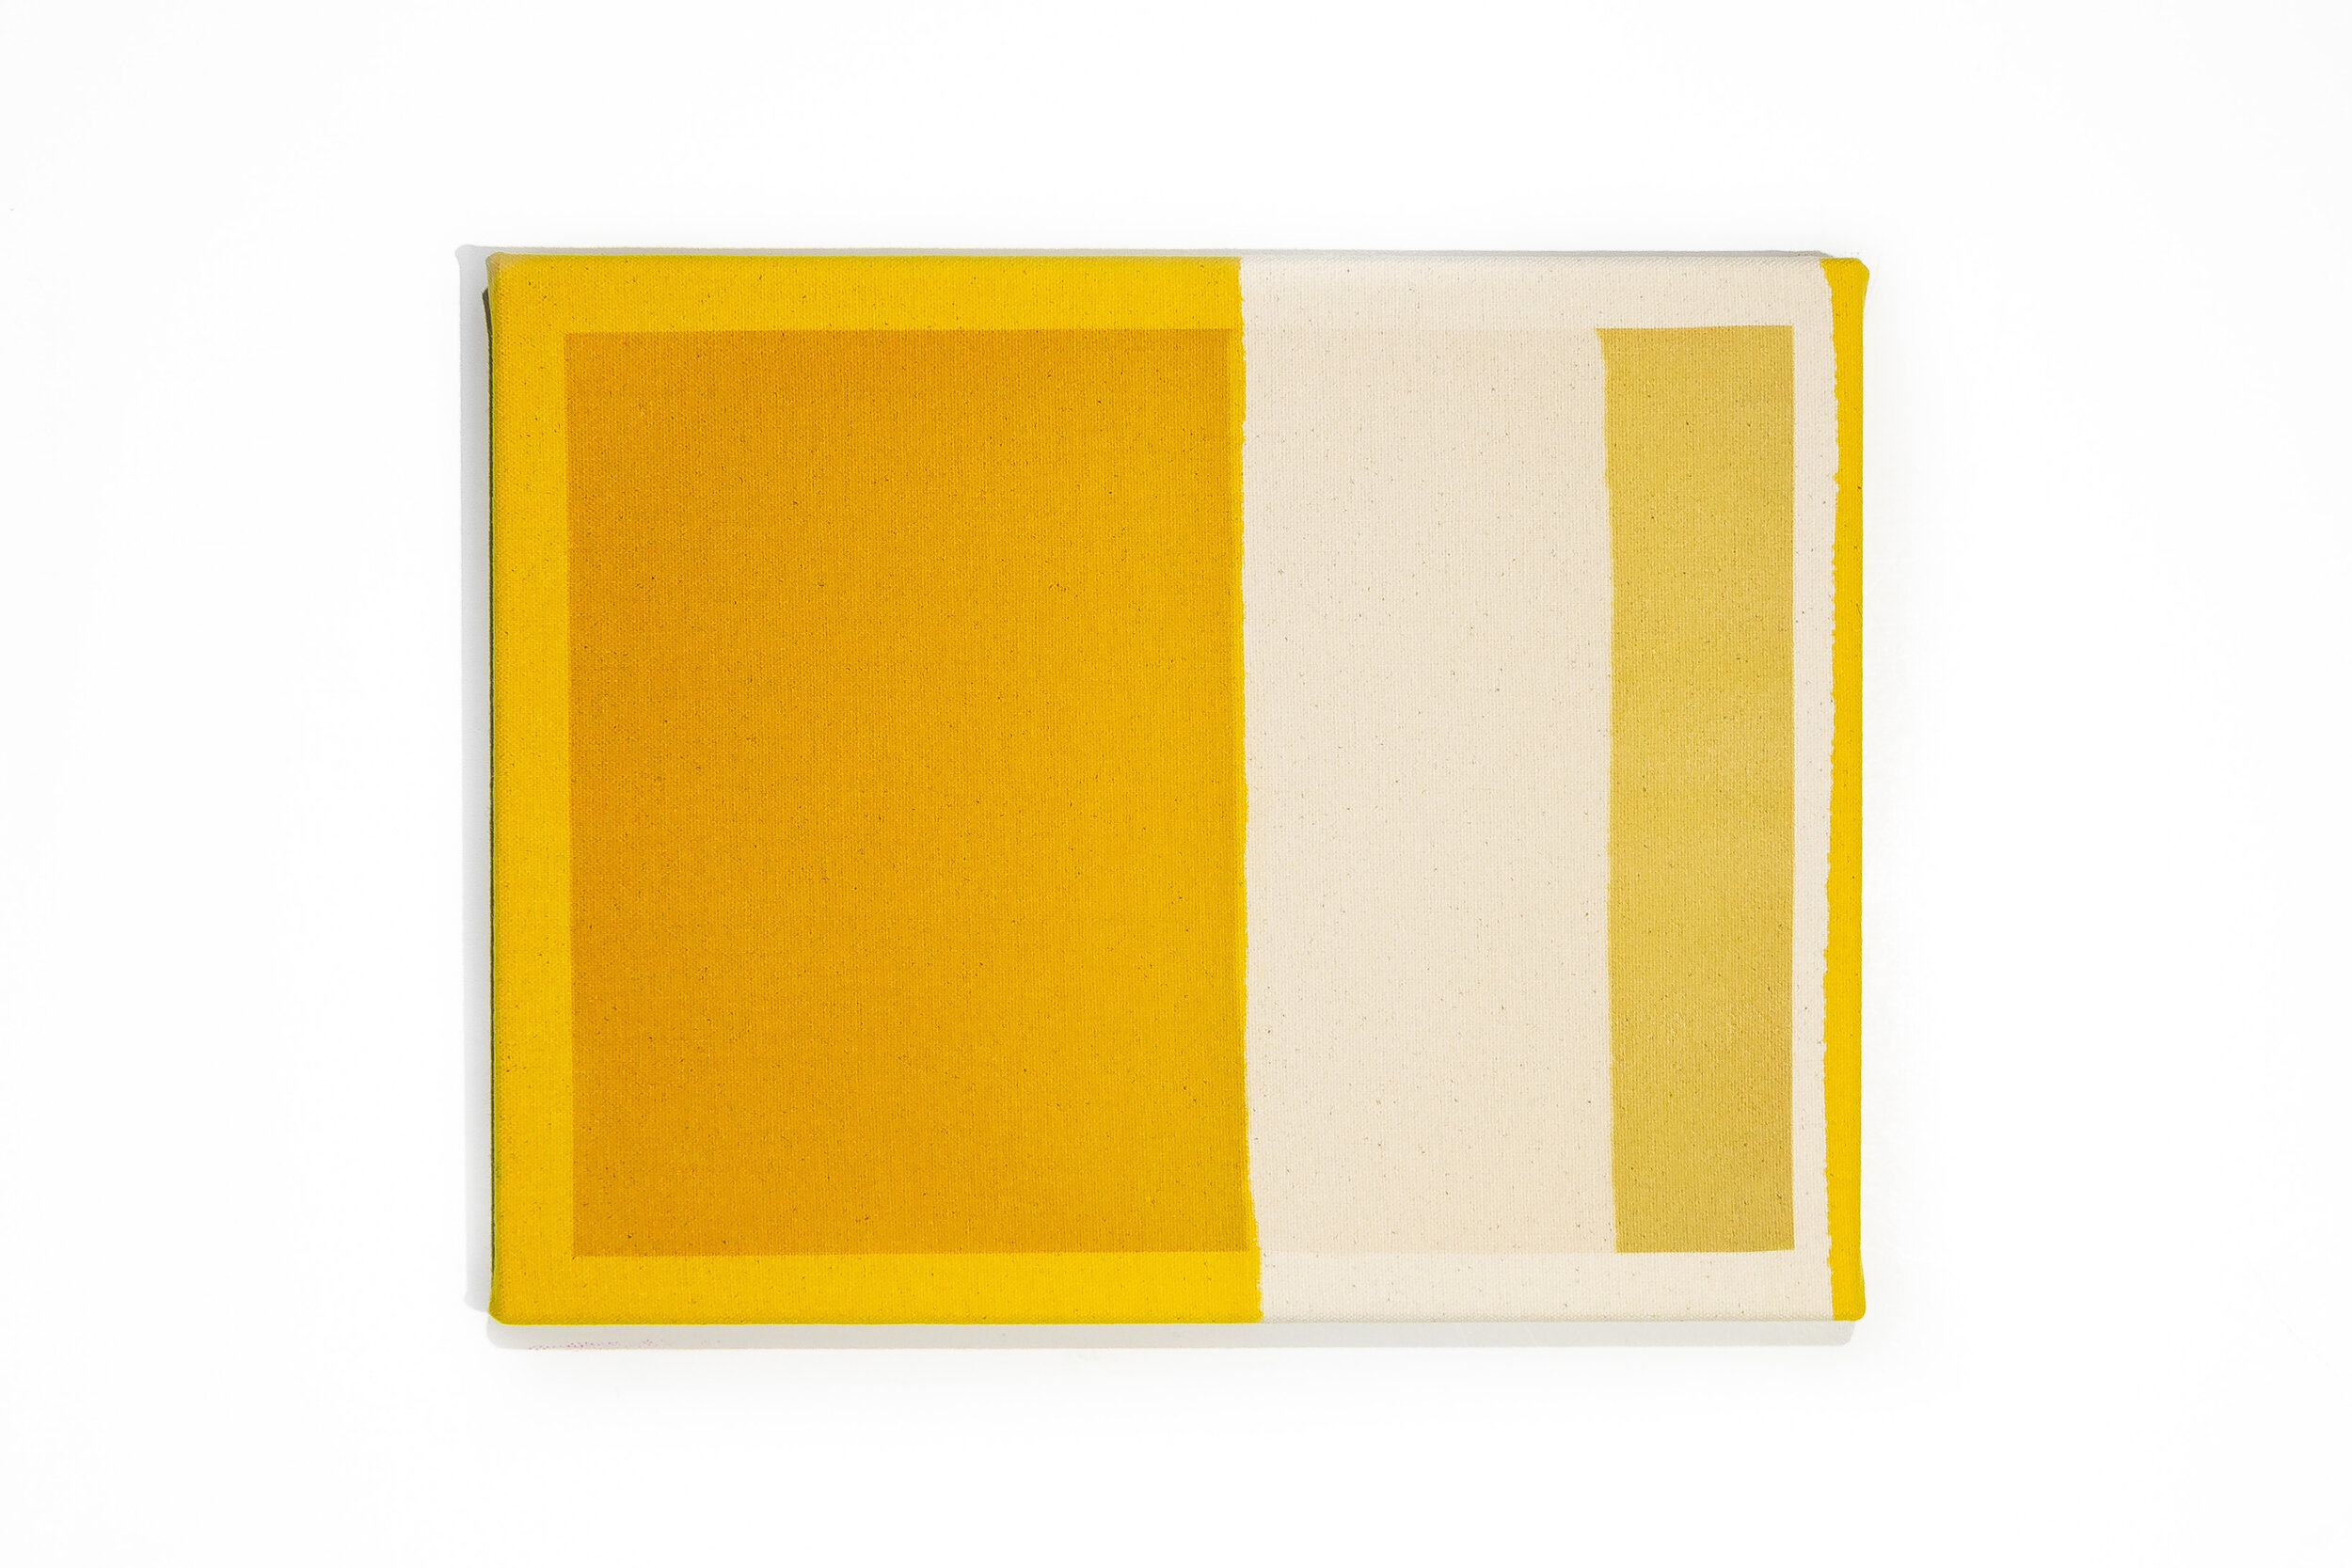   Underlay, yellow, 2019 Inkjet print and inkjet ink on canvas  31.5 x 24 cm 